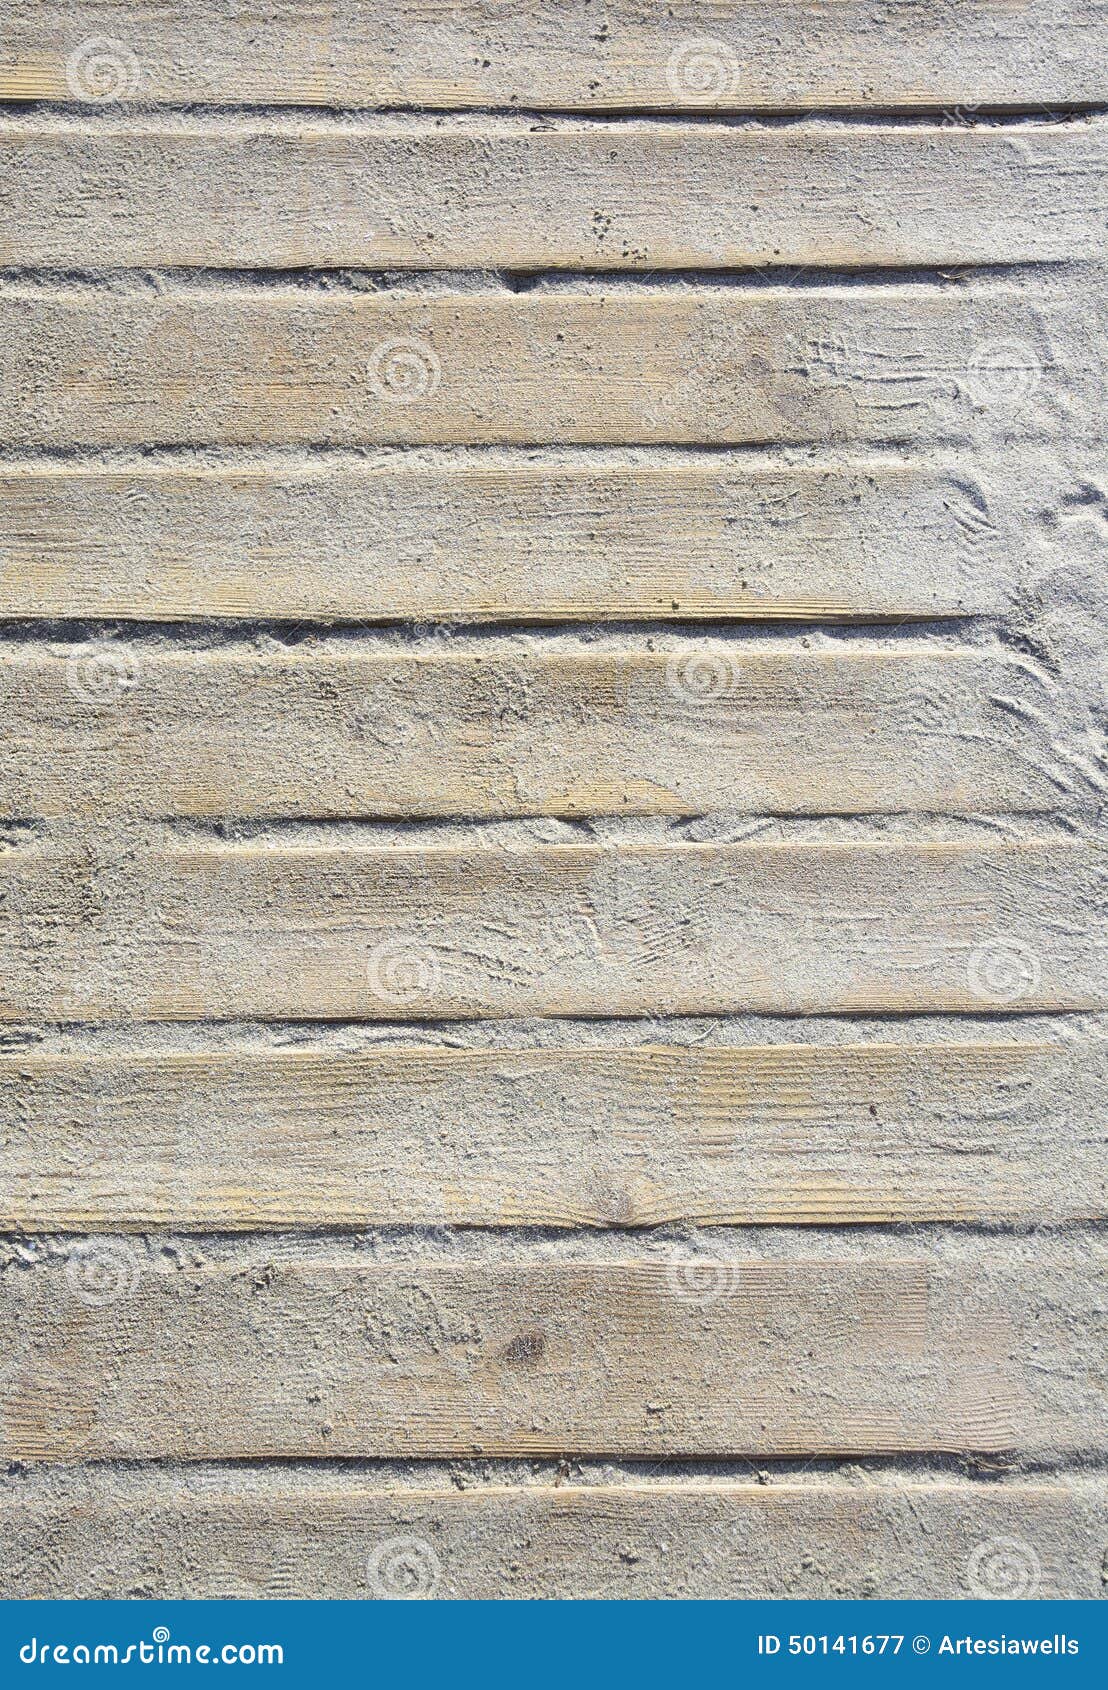 sandy boardwalk texture